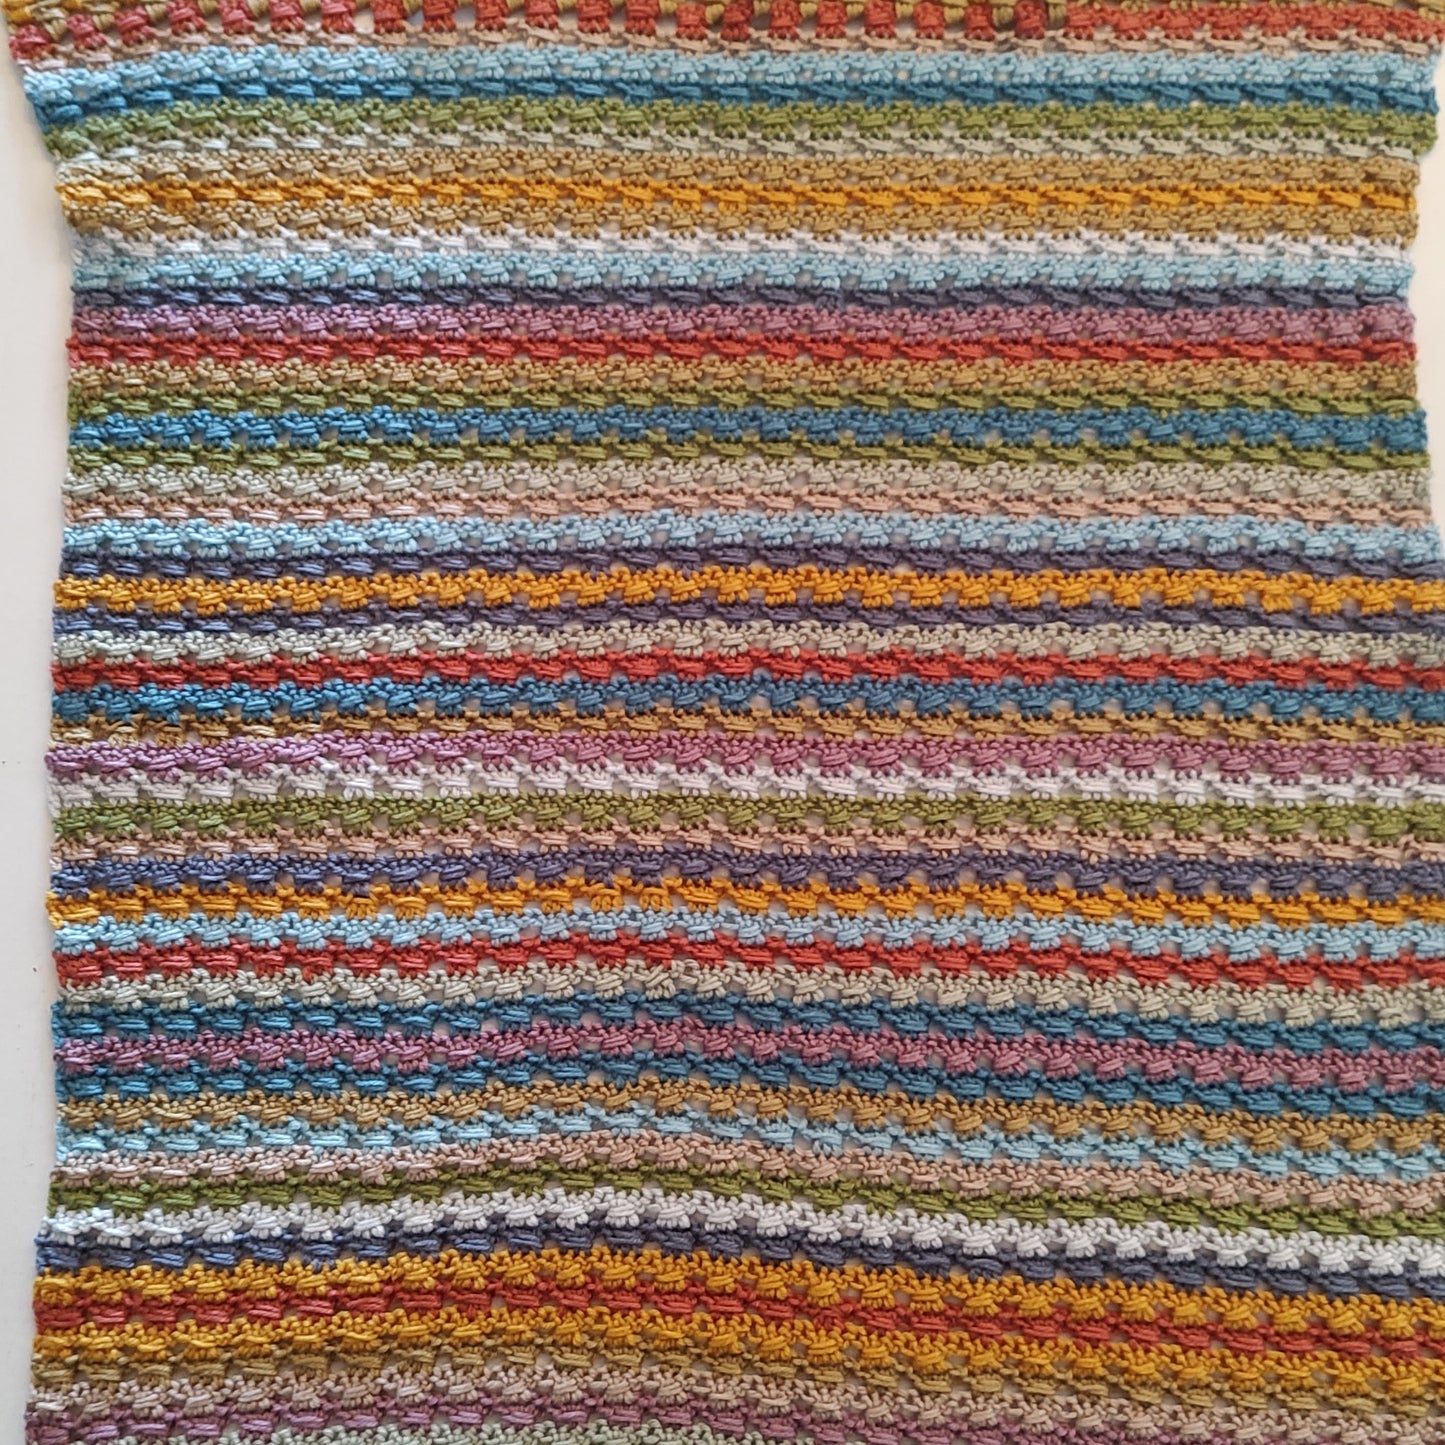 Crocheted Blanket - striped baby blanket